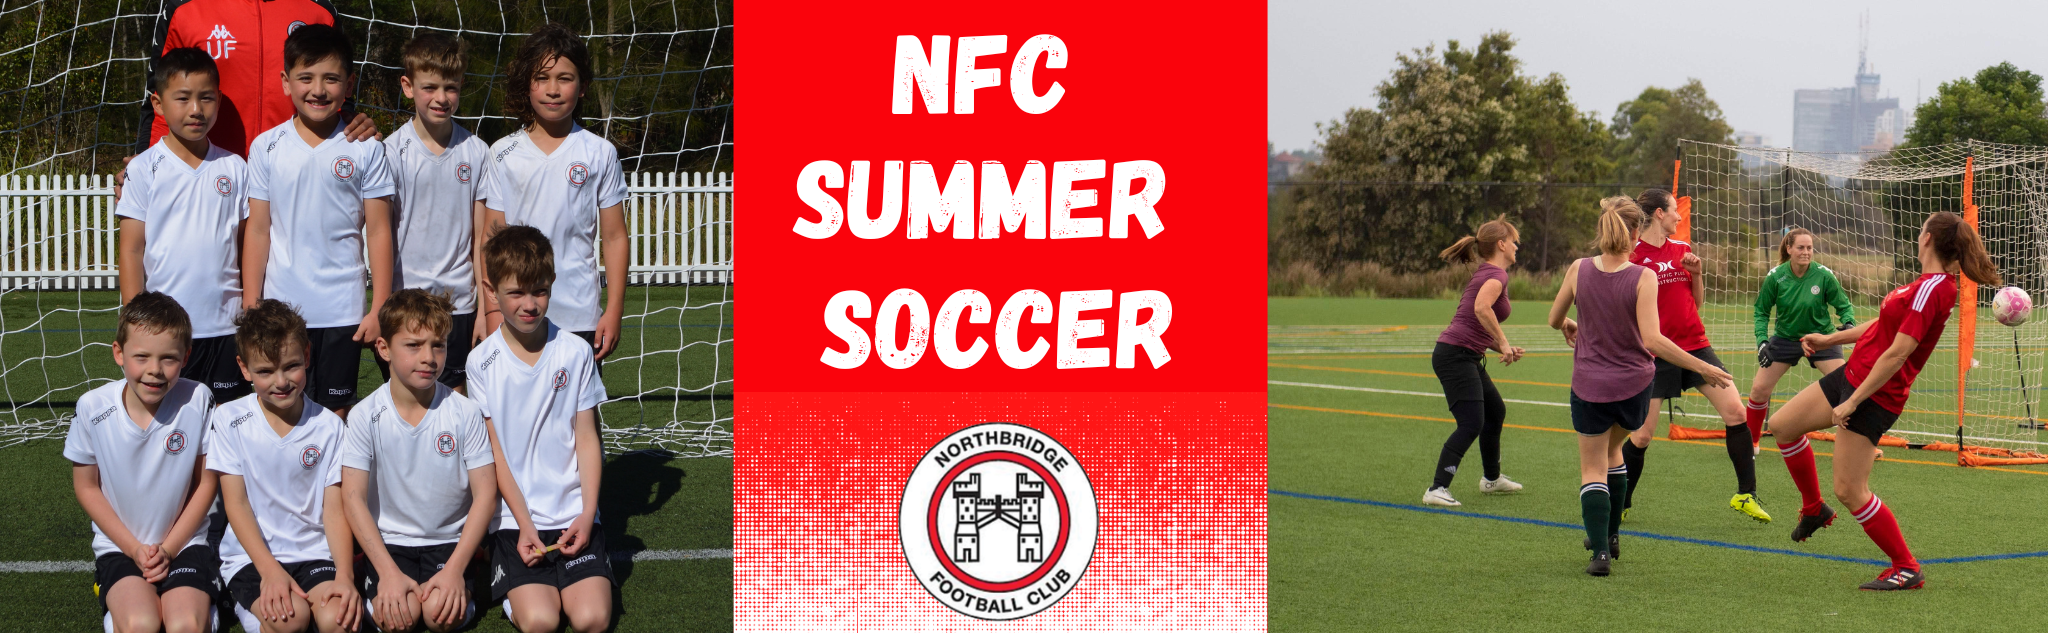 Summer Football - Coming Soon to NBO